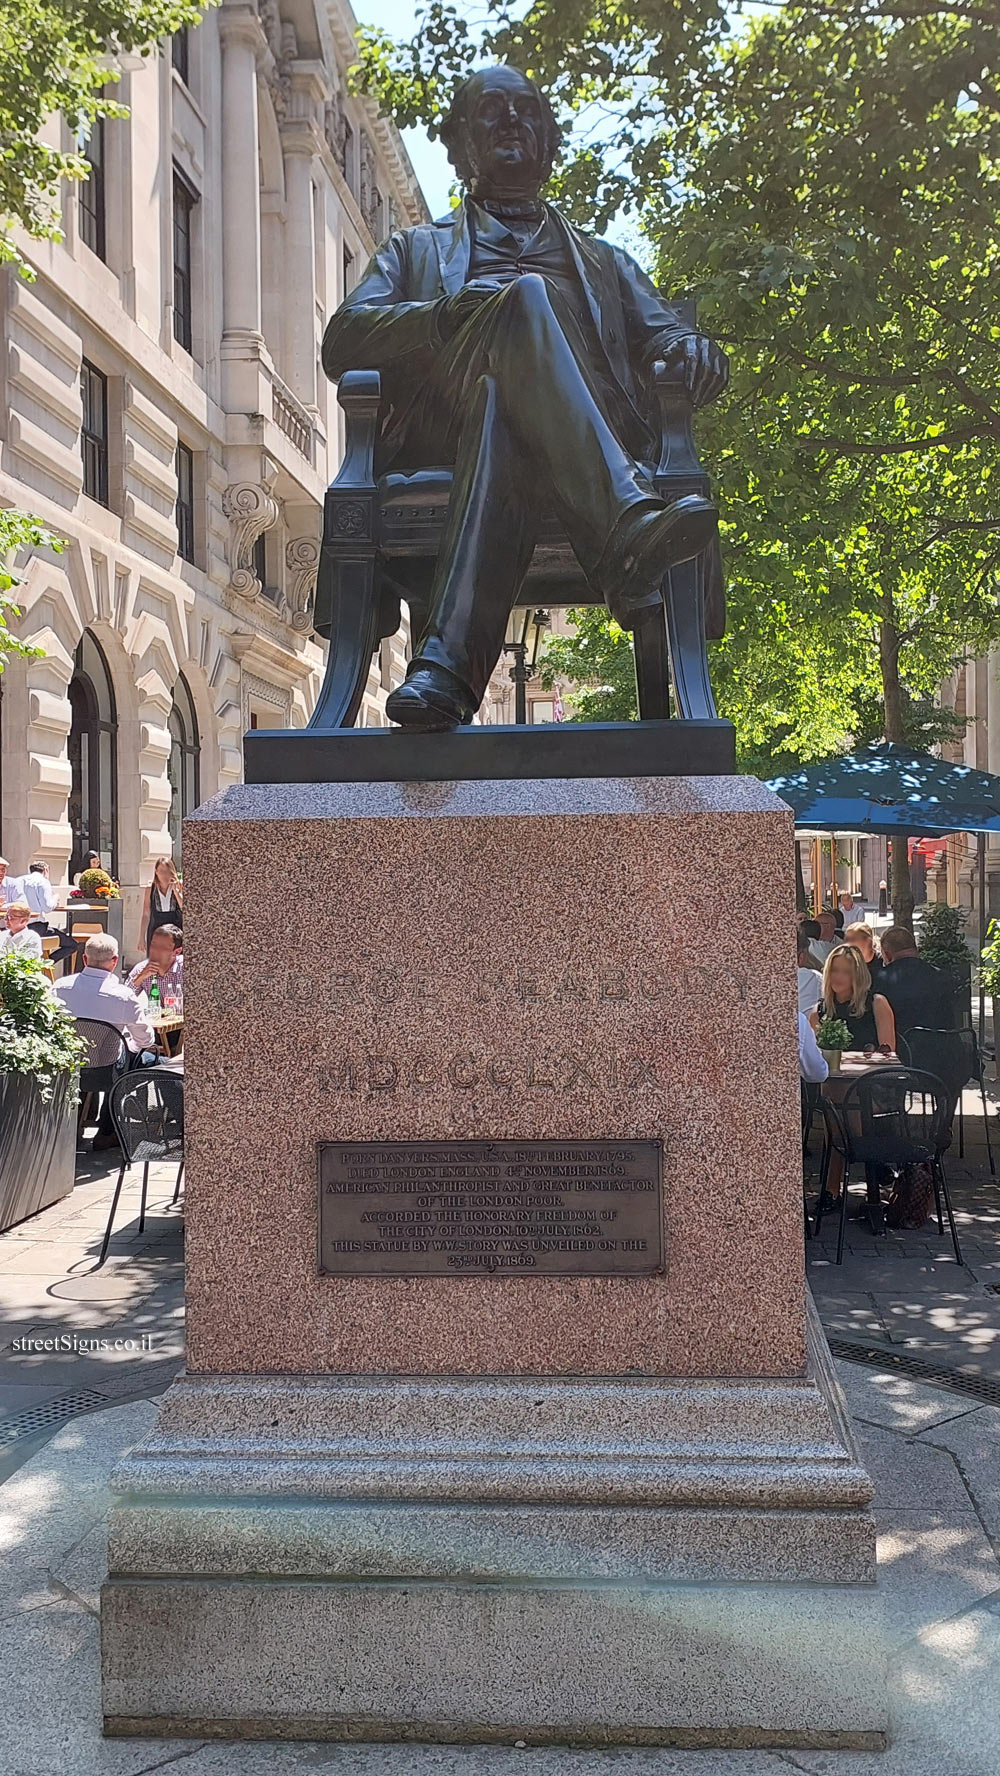 London - A statue commemorating the philanthropist George Peabody - 14 Royal Exchange, London EC3V 3LT, UK